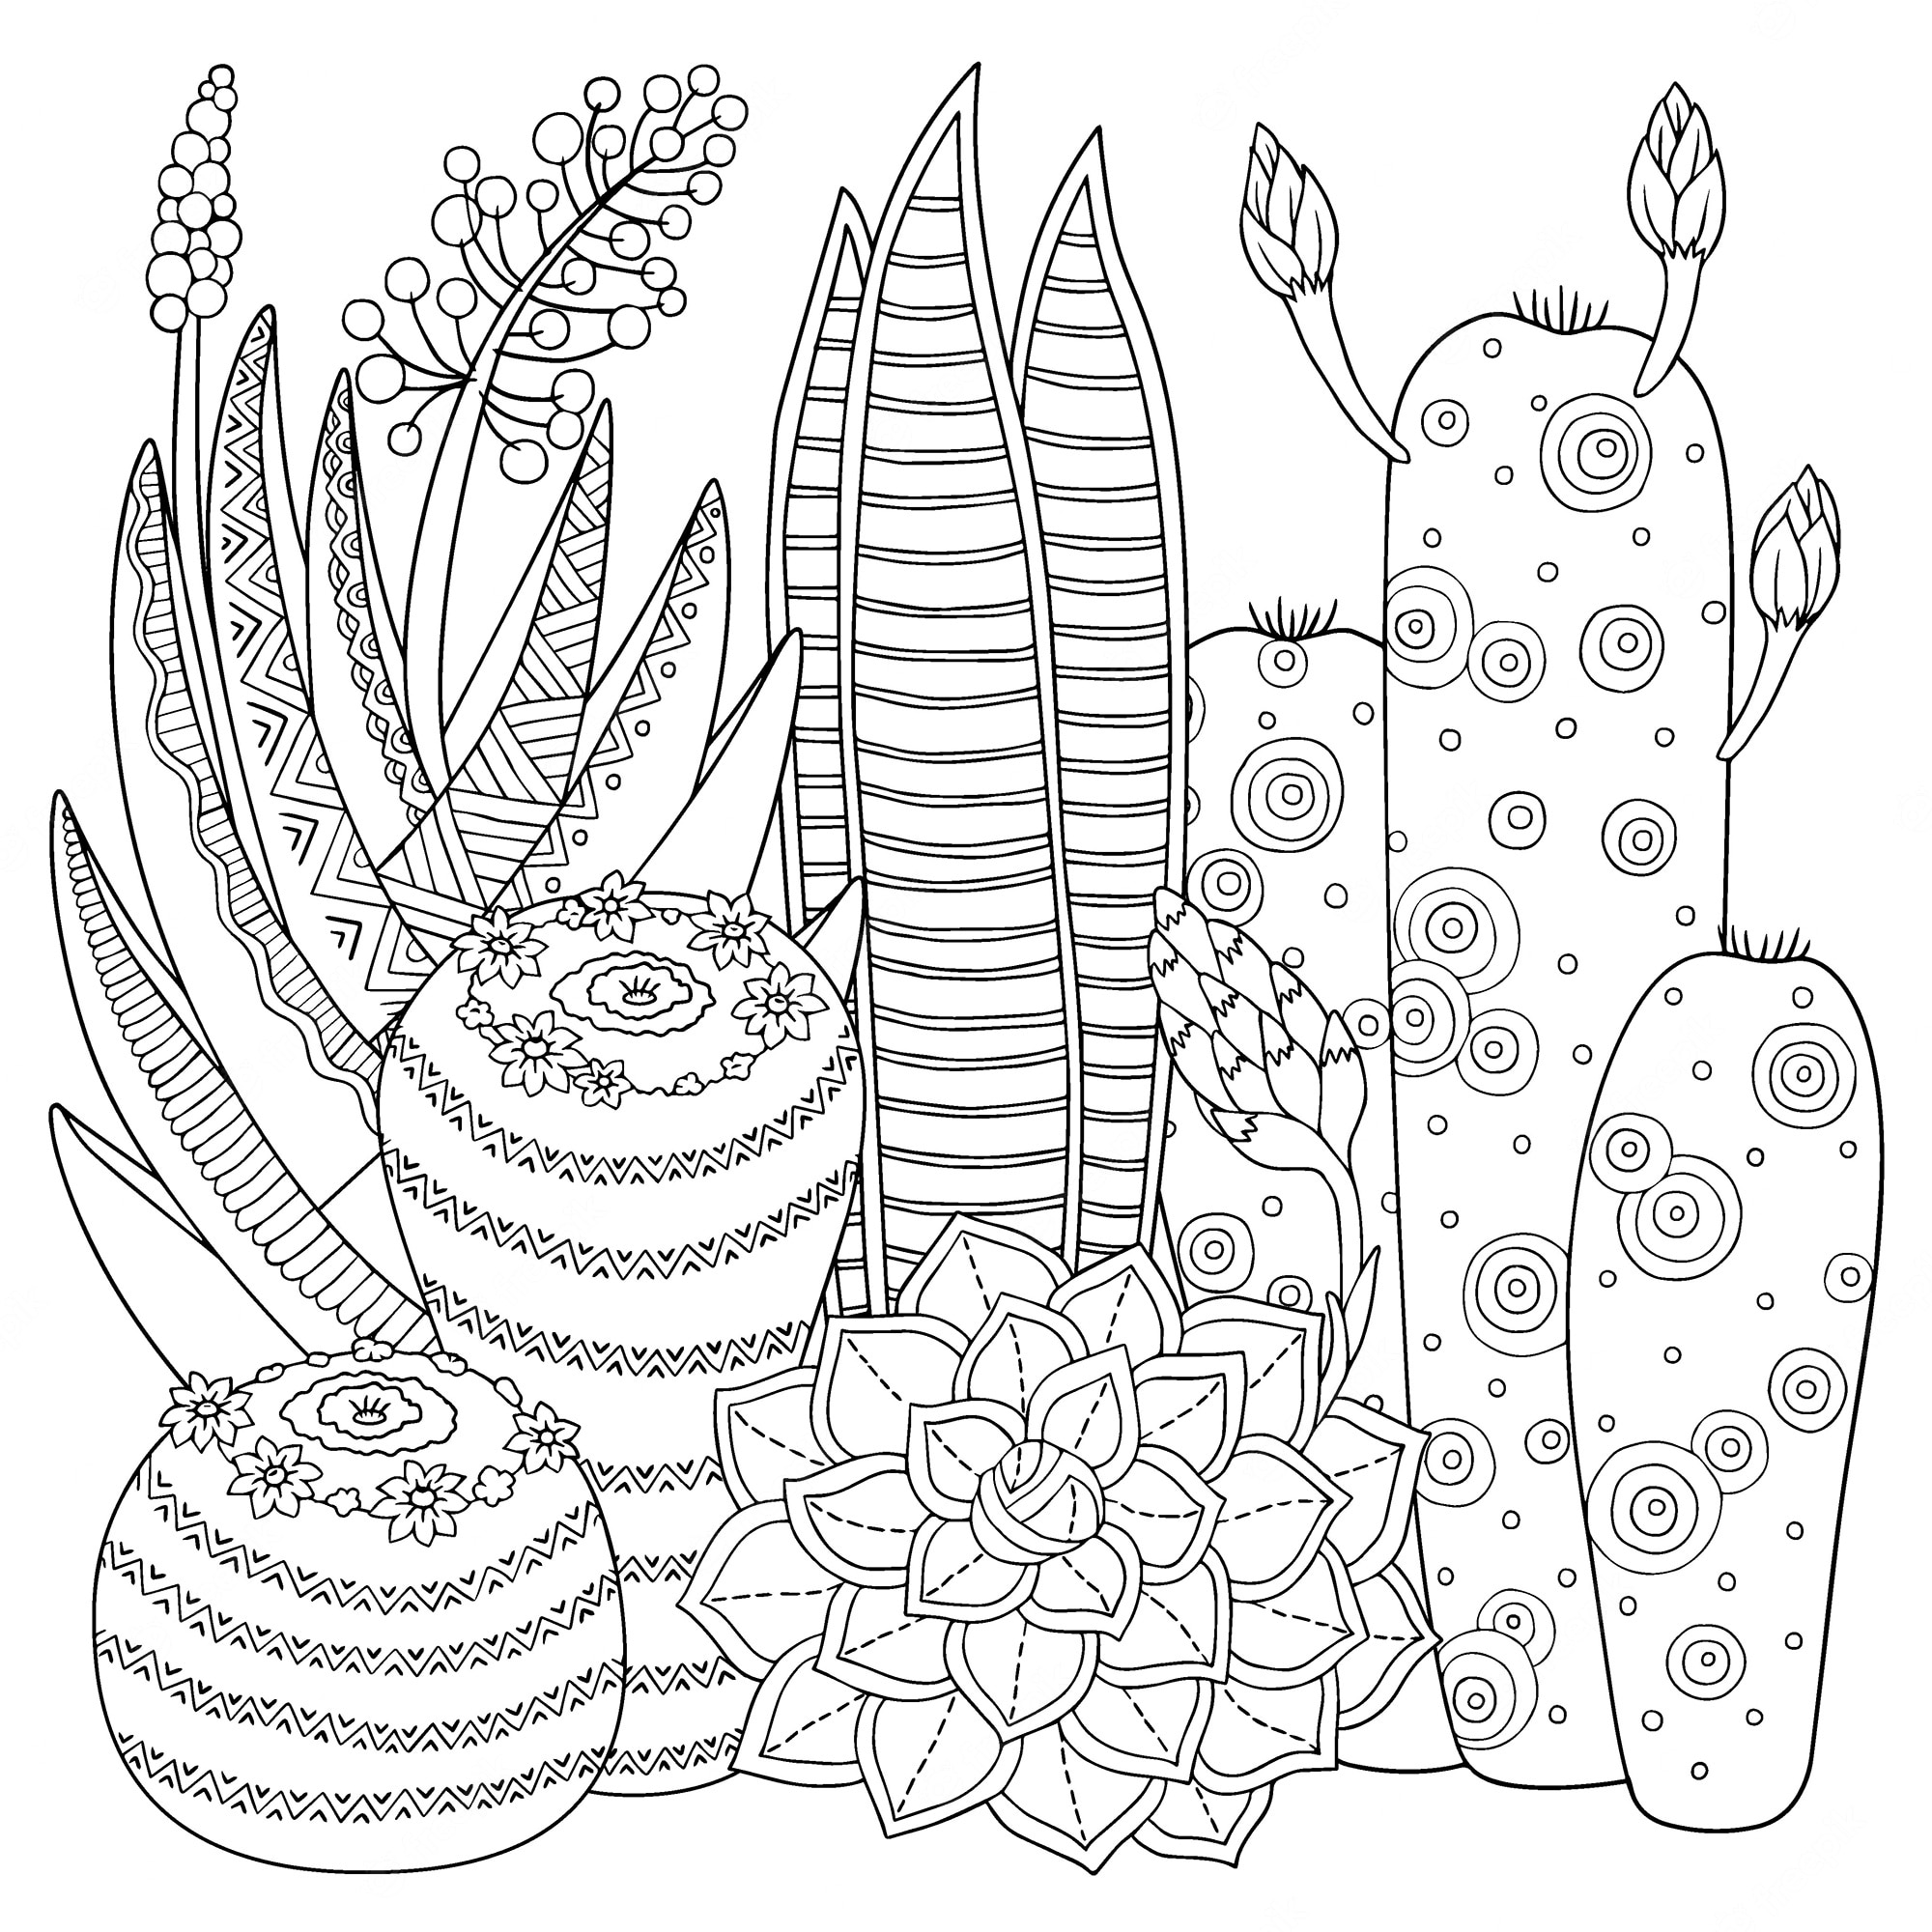 Cactus coloring Vectors & Illustrations for Free Download | Freepik